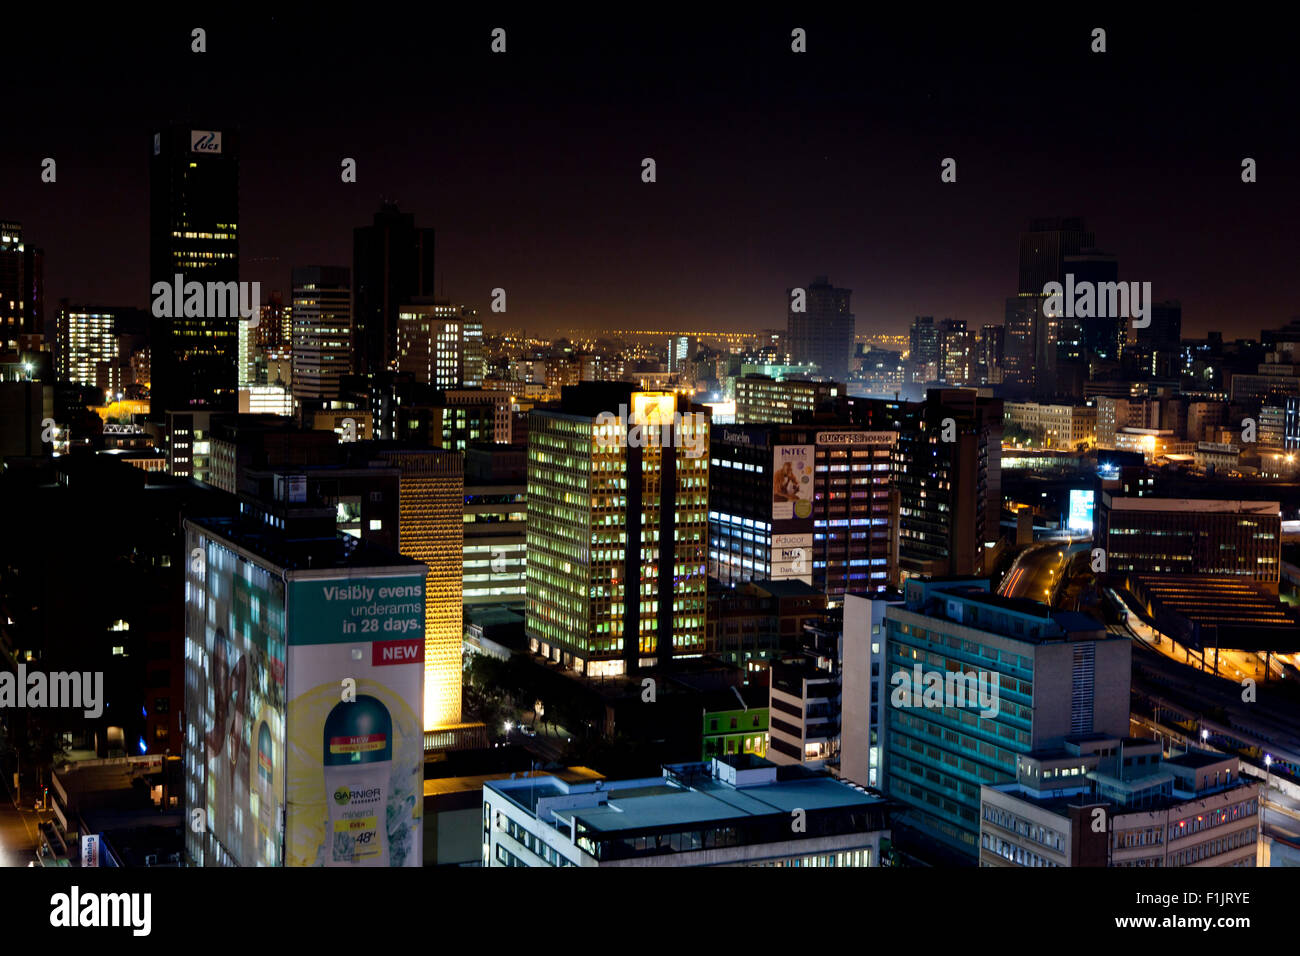 Night shot of a city scene Stock Photo